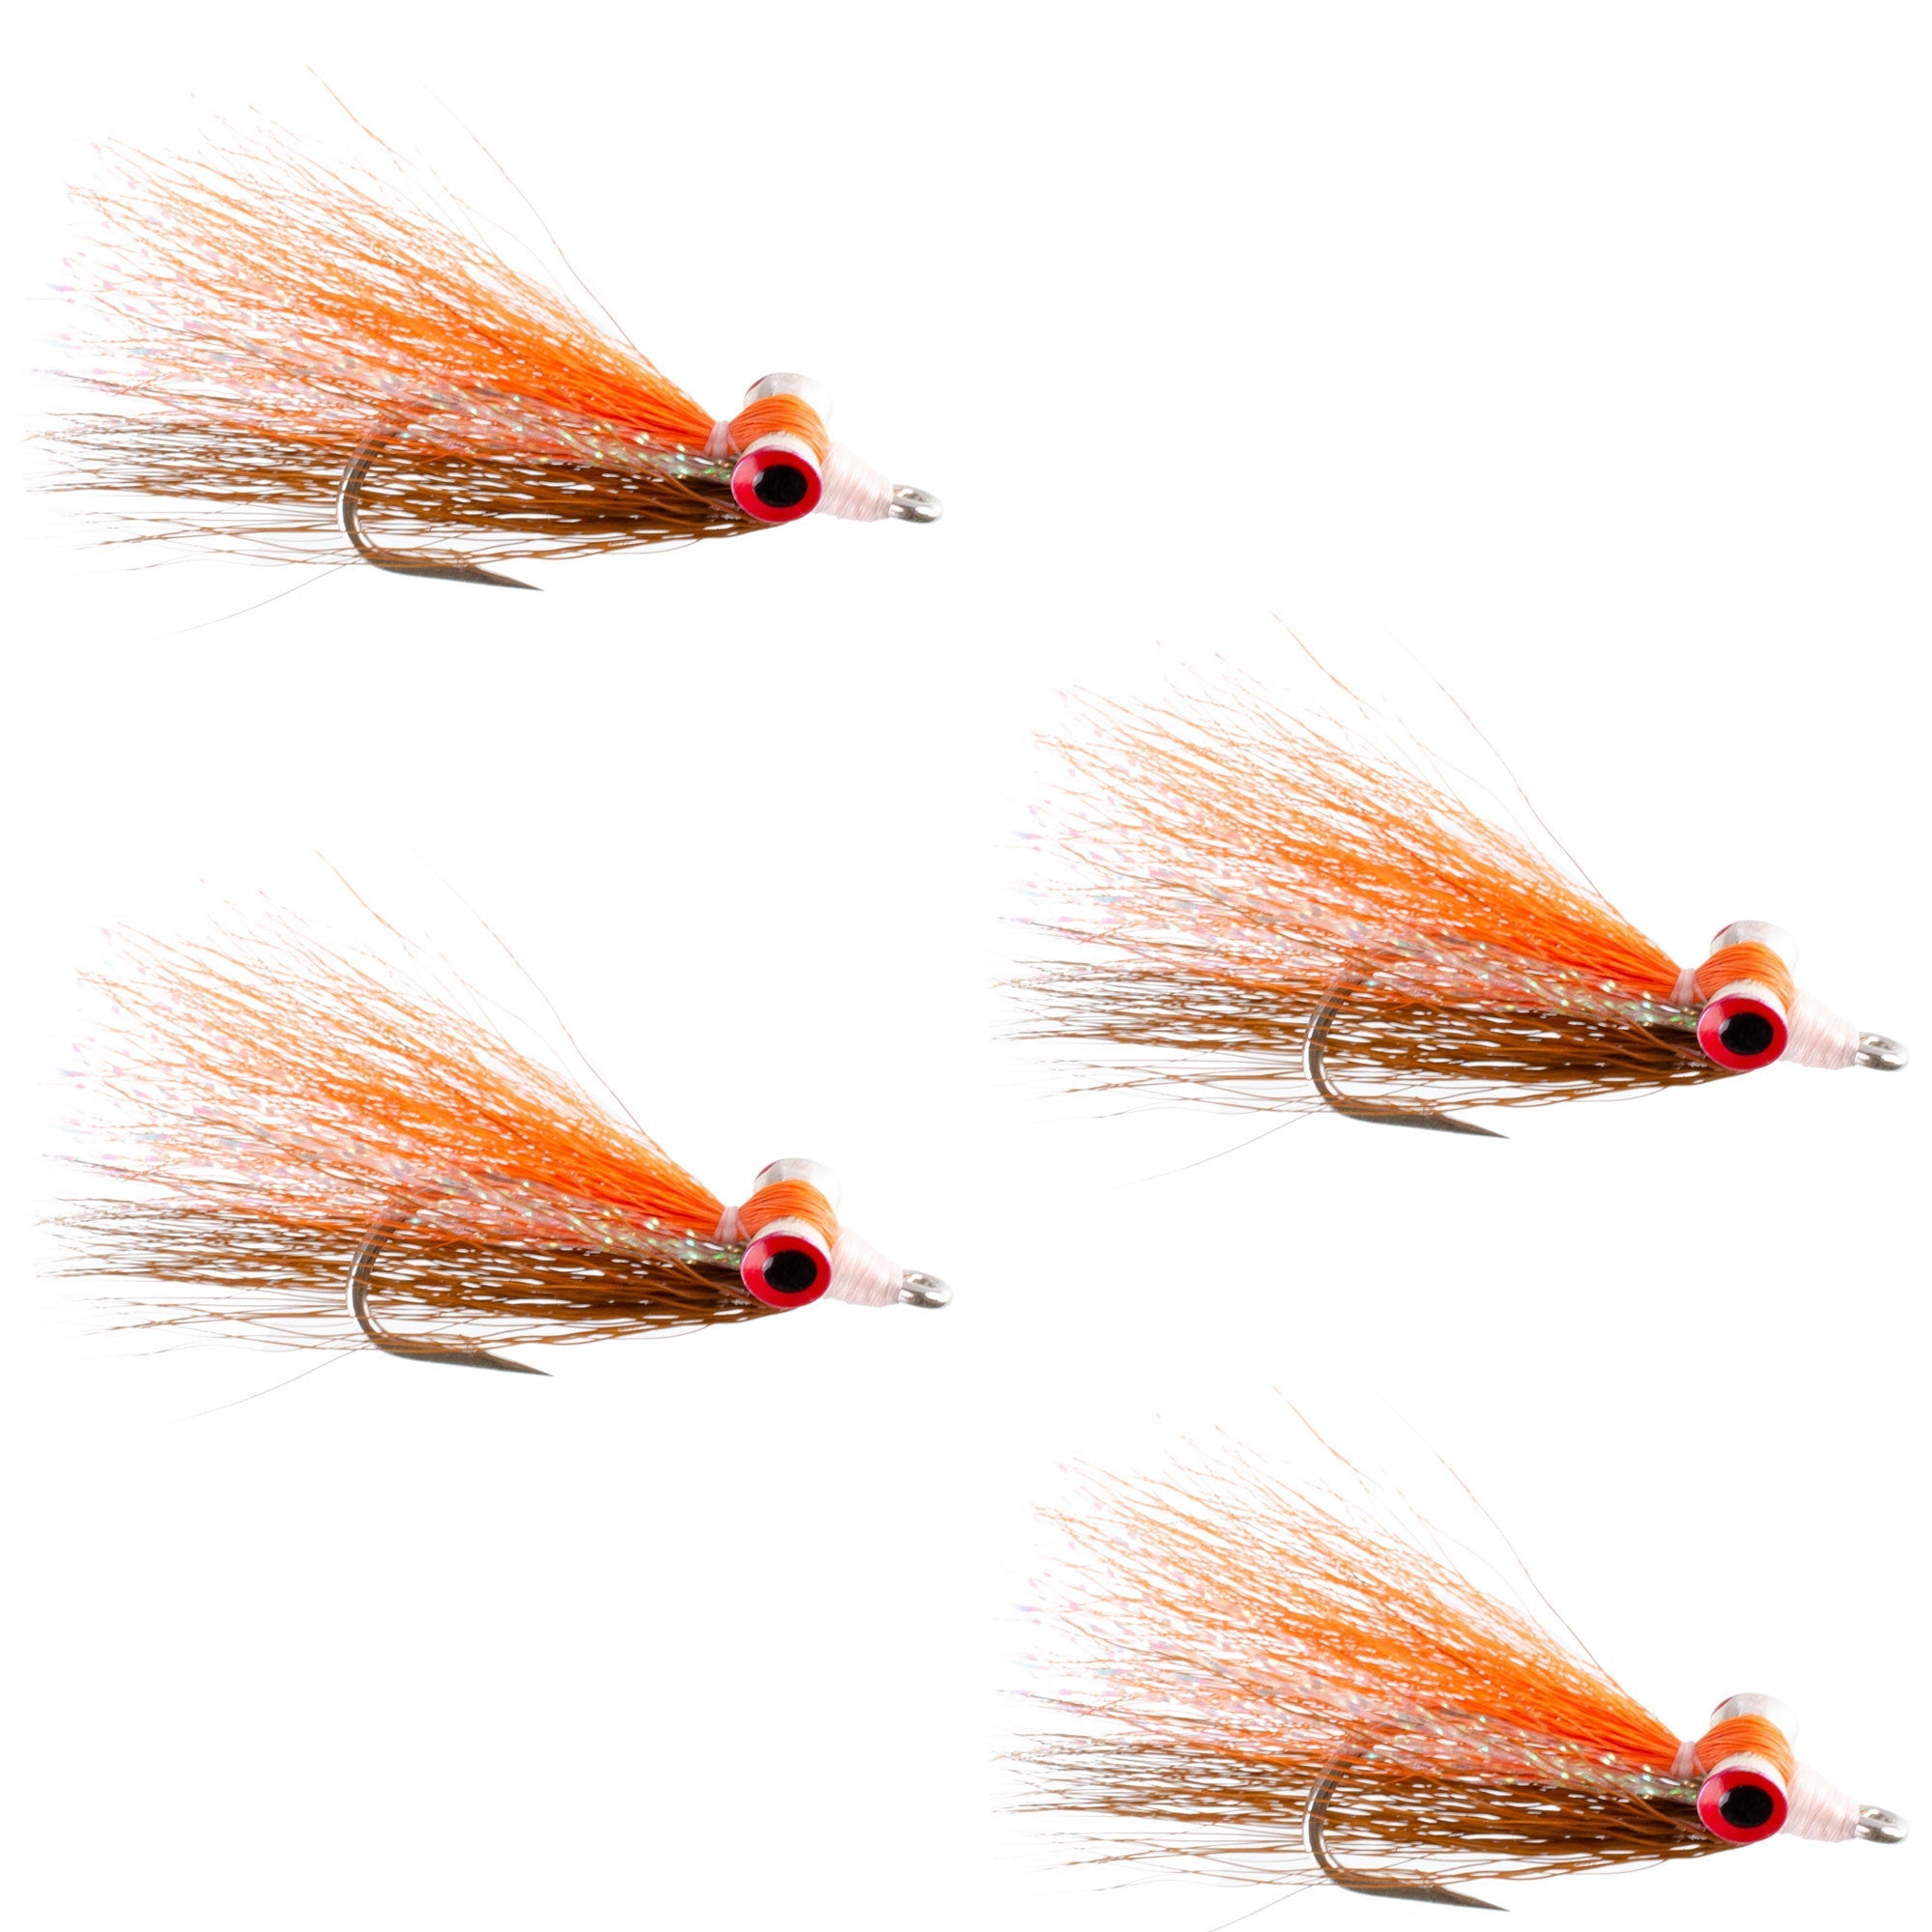 Clouser Freshwater Deep Minnow Brown Orange Sunfish - Streamer Fly Fishing Flies - 4 Trout and Bass Flies - Hook Size 4